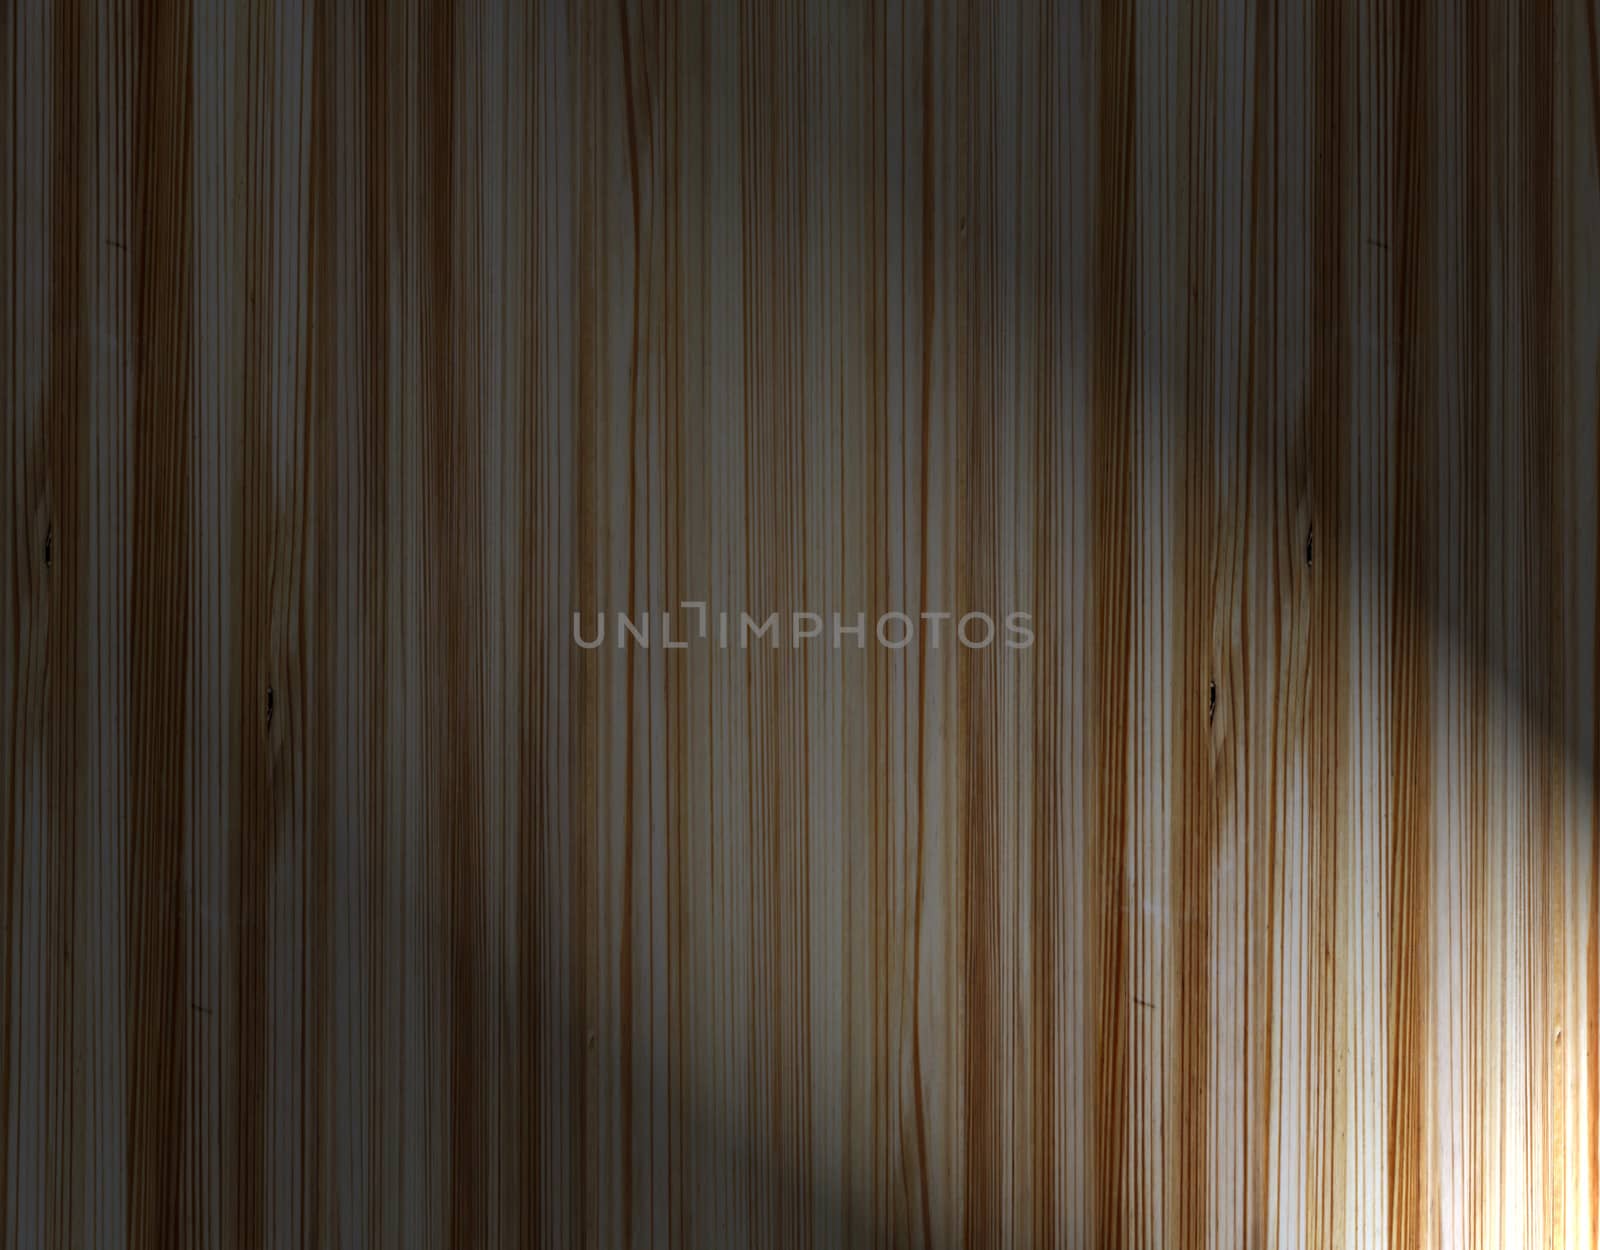 High resolution blonde wood texture with black vignette